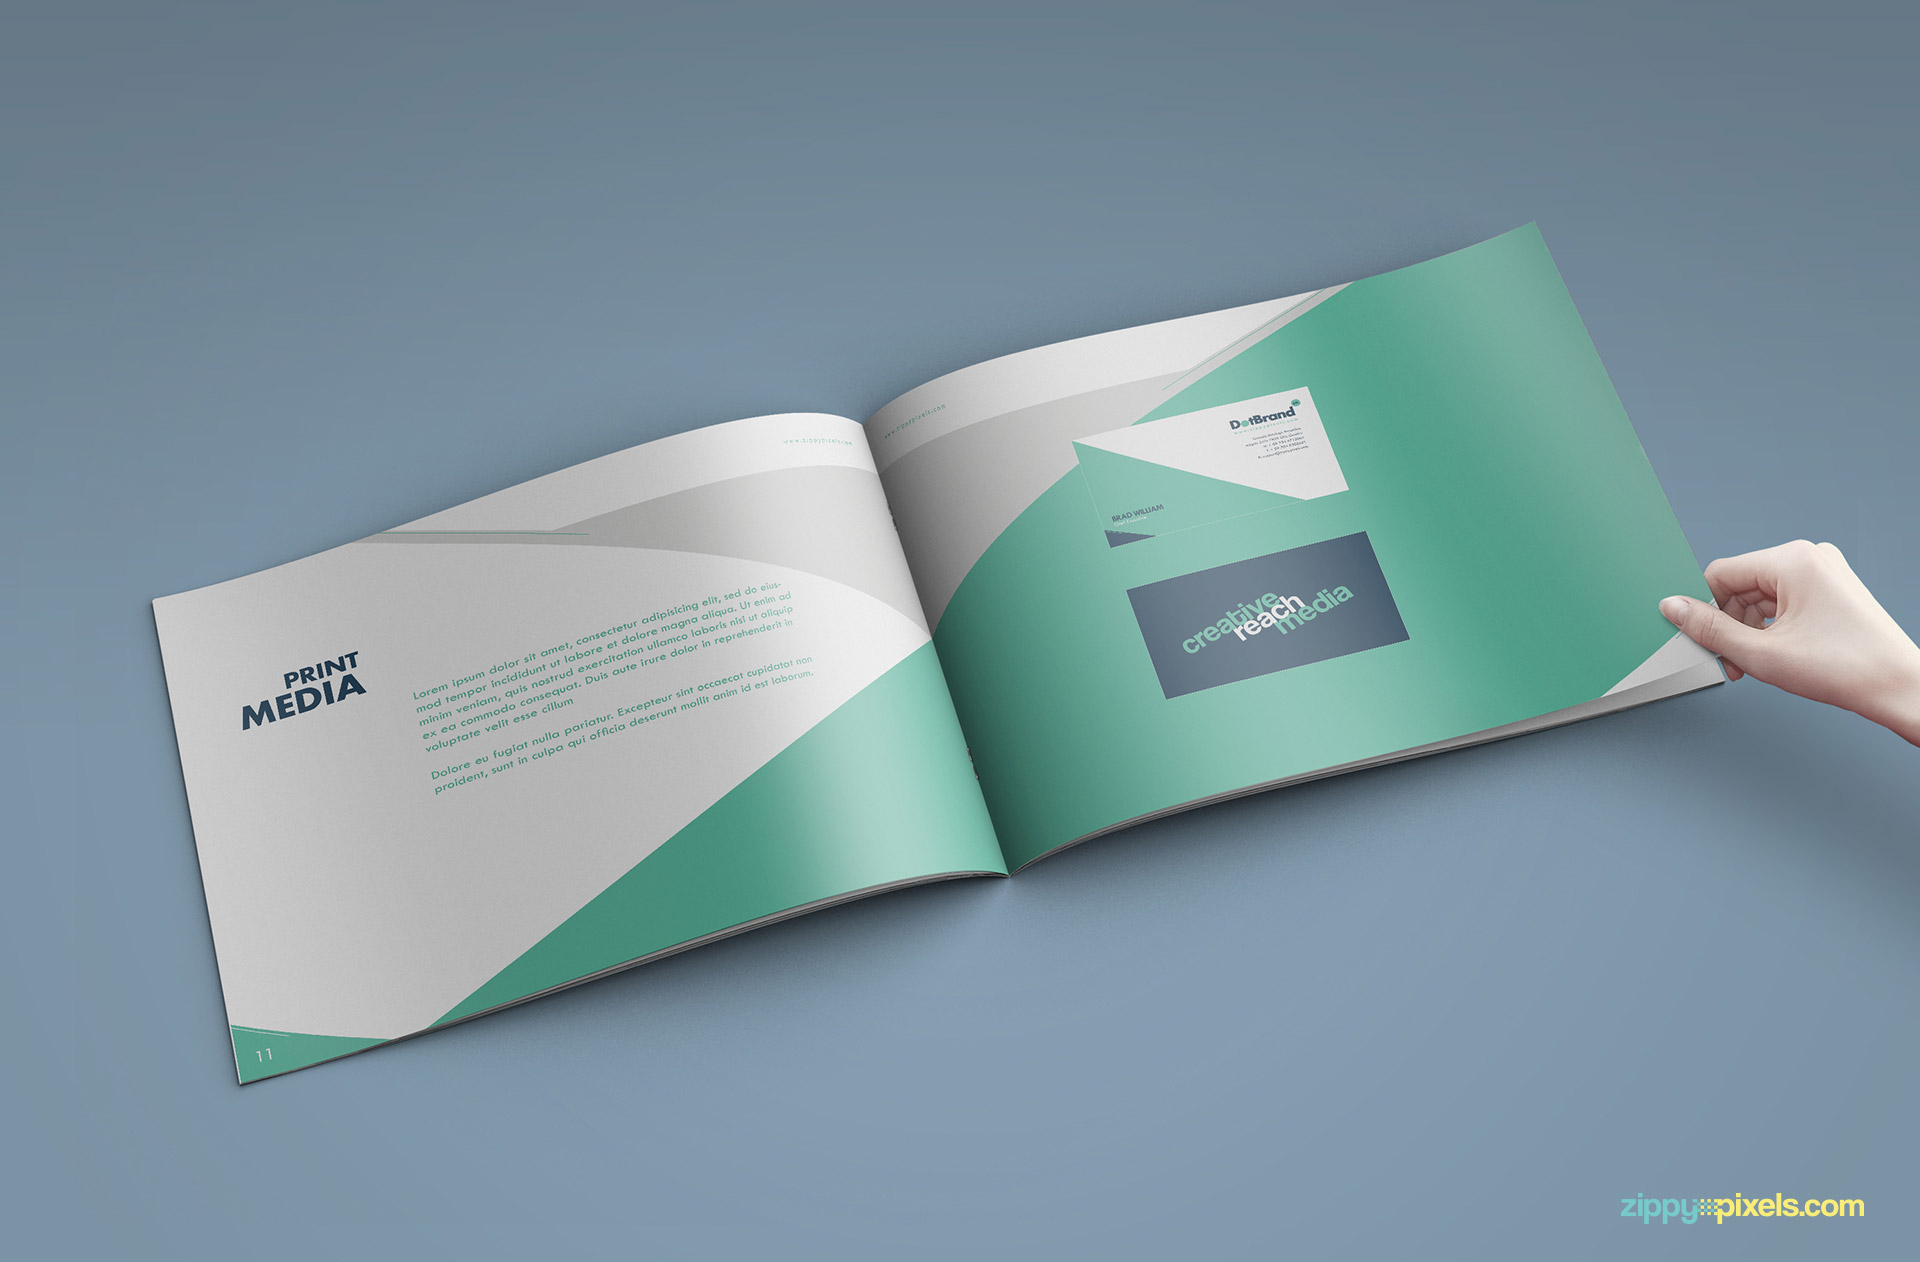 10-brand-book-5-print-media-business-card